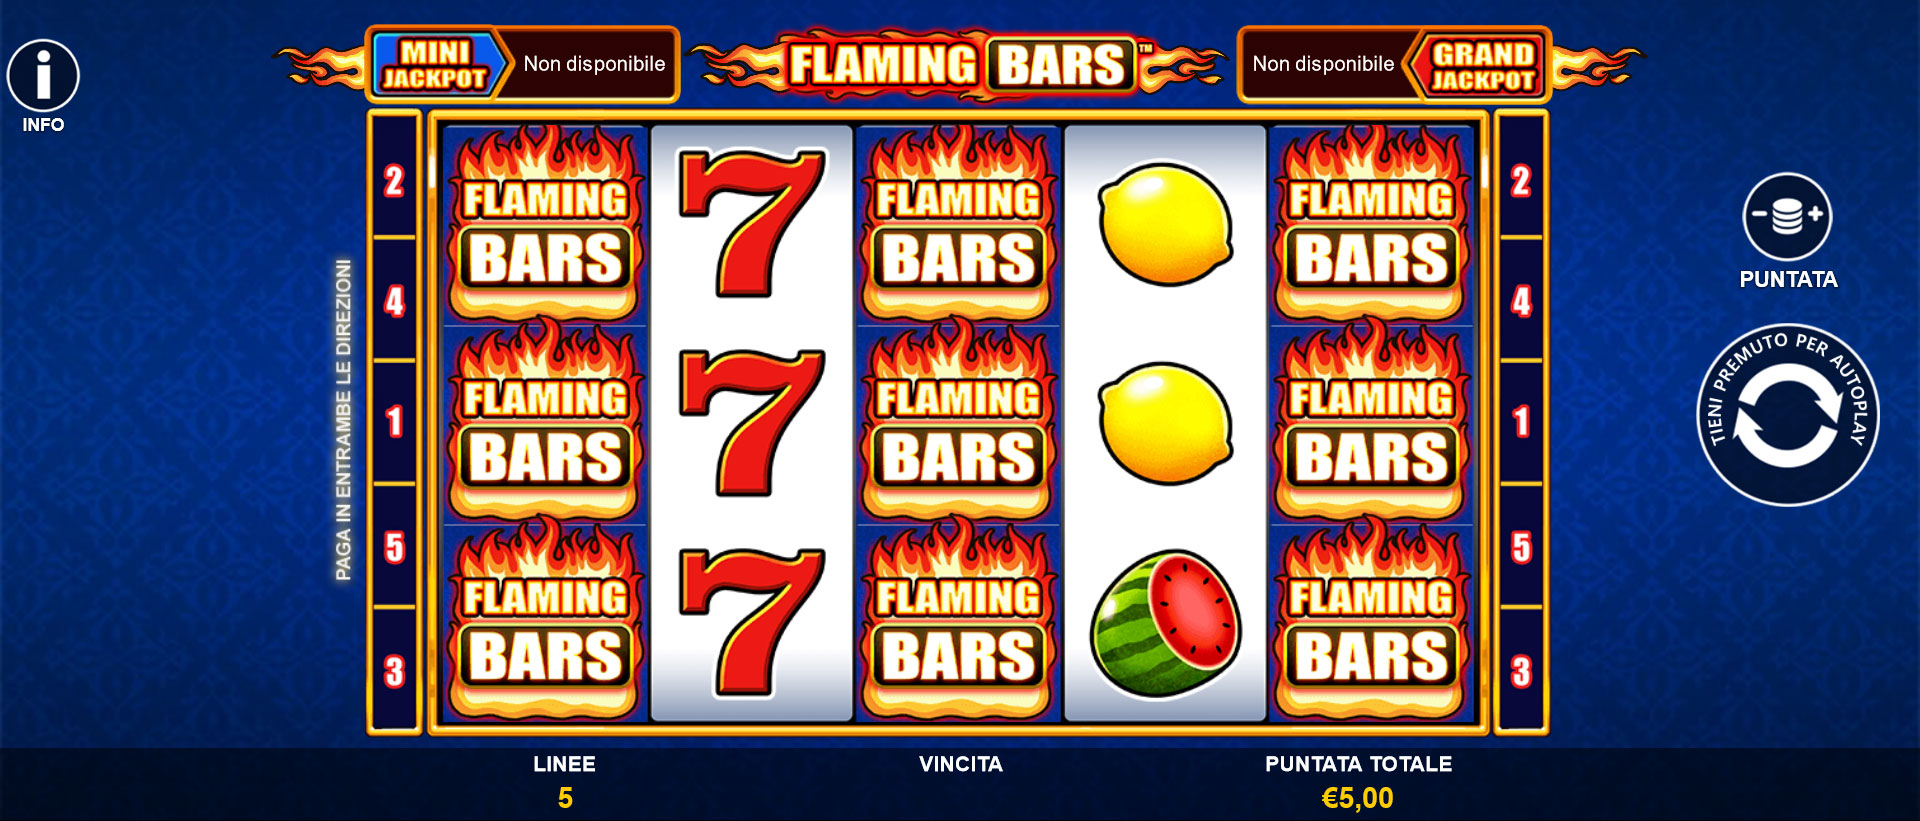 schermata della slot machine Flaming Bars